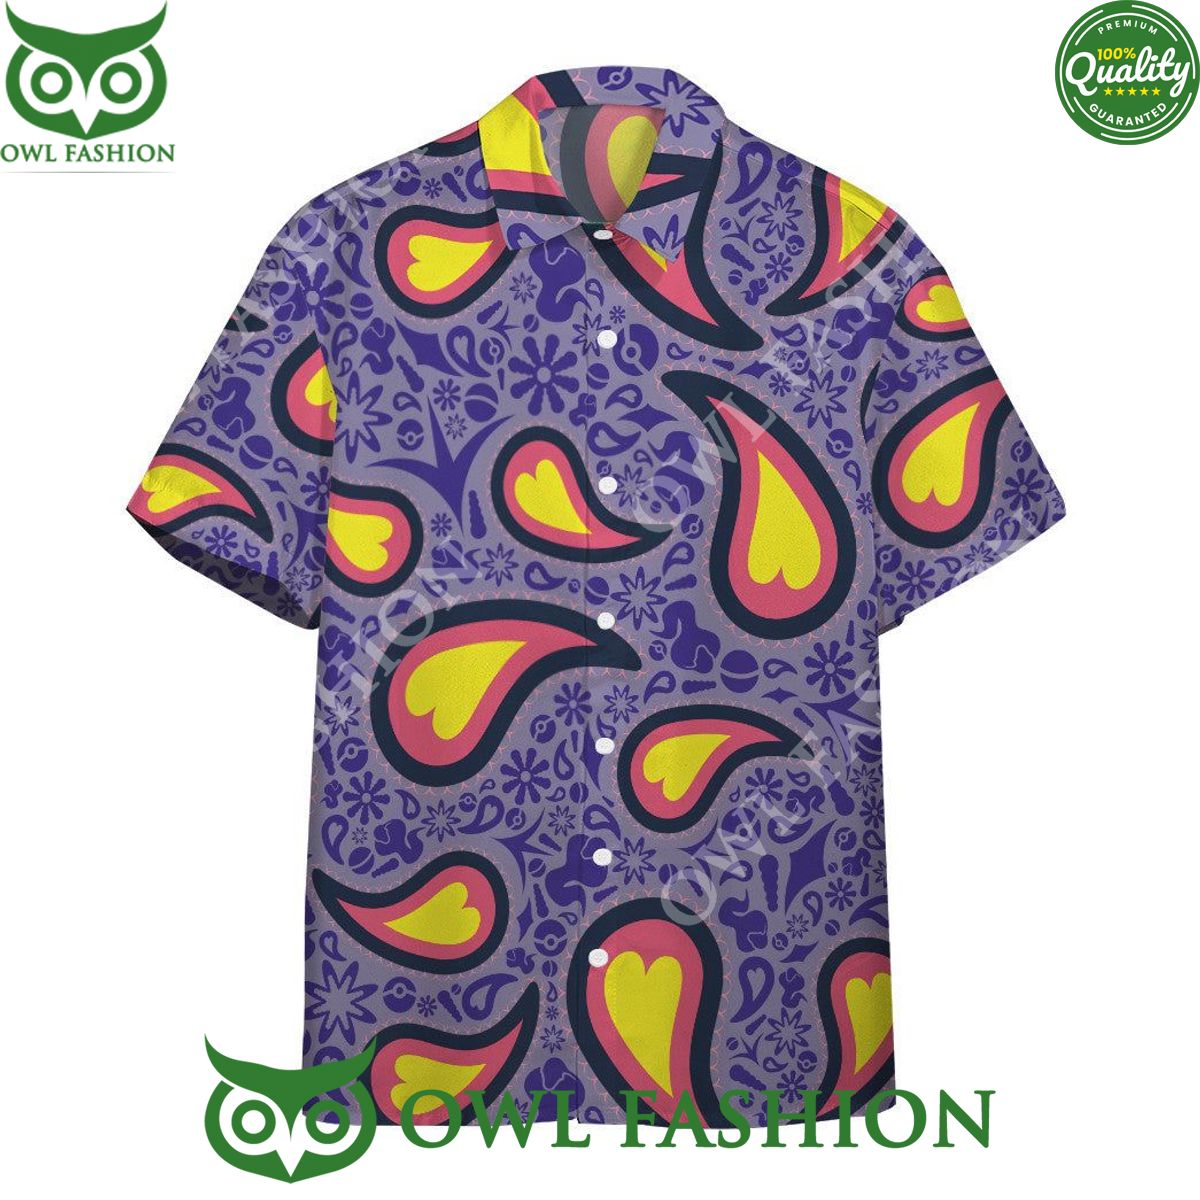 arbok pokemon purple poison type limited hawaii shirt 1 OkirB.jpg